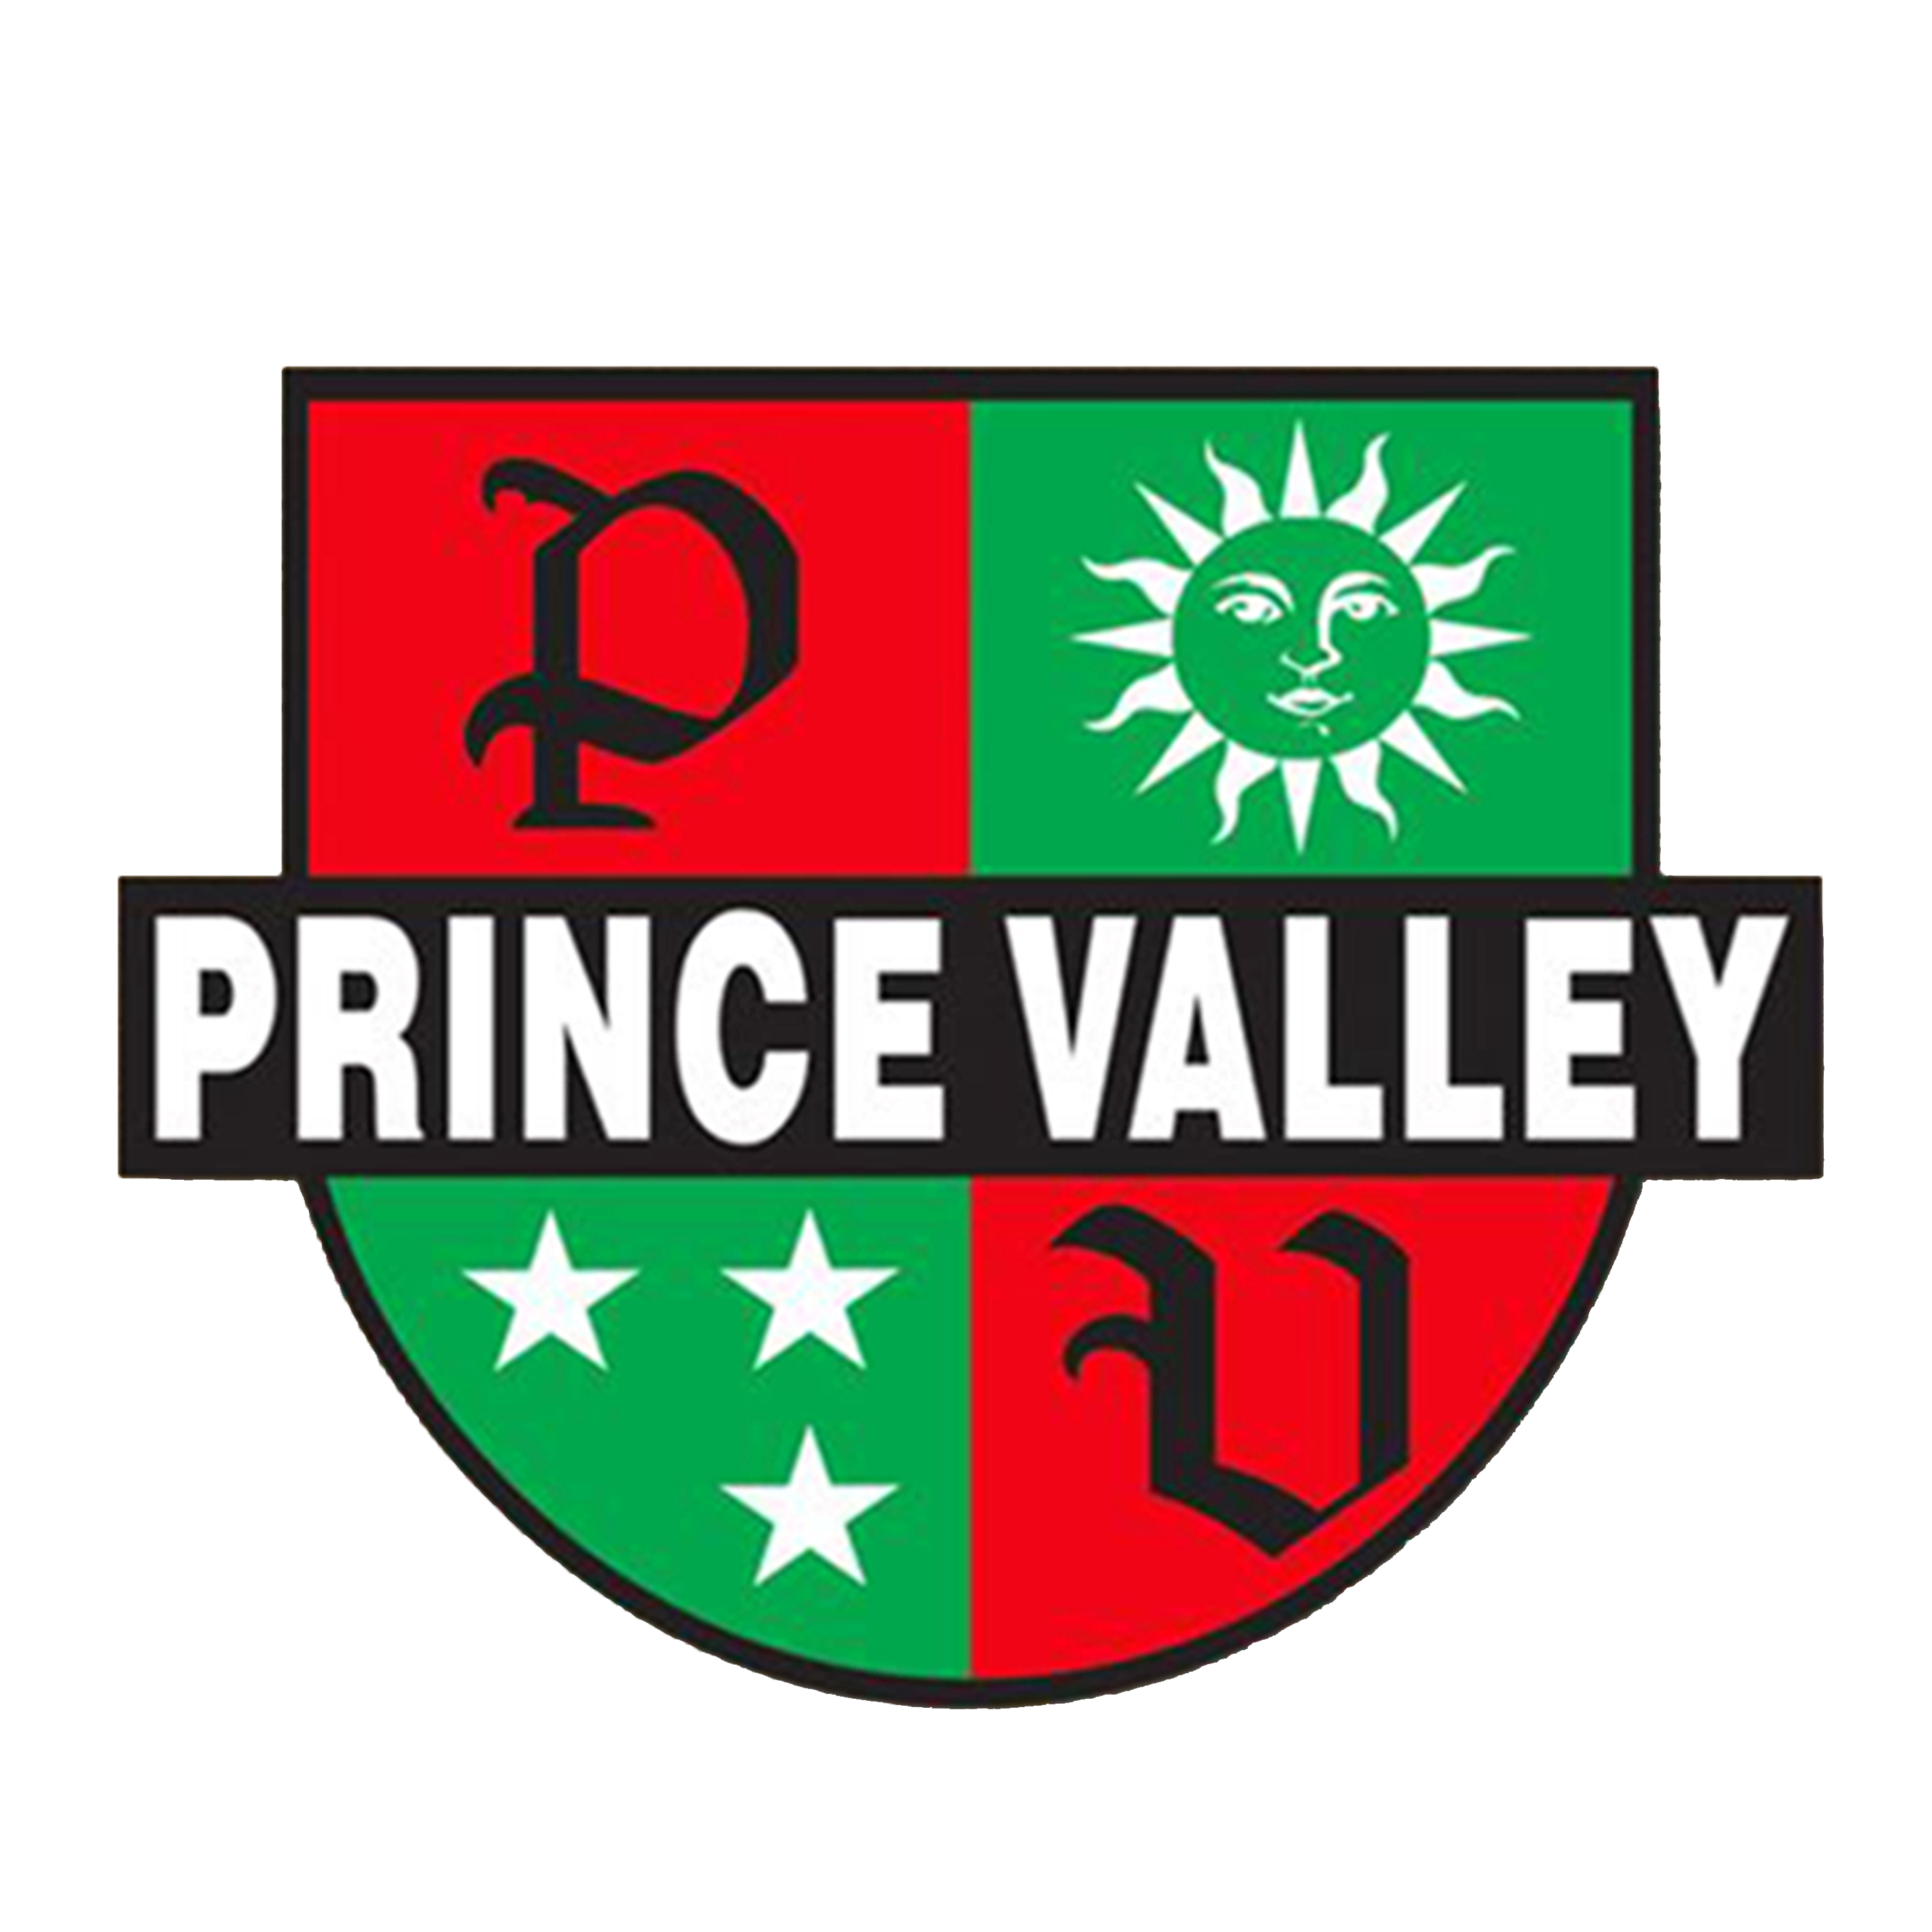 Prince Valley Market